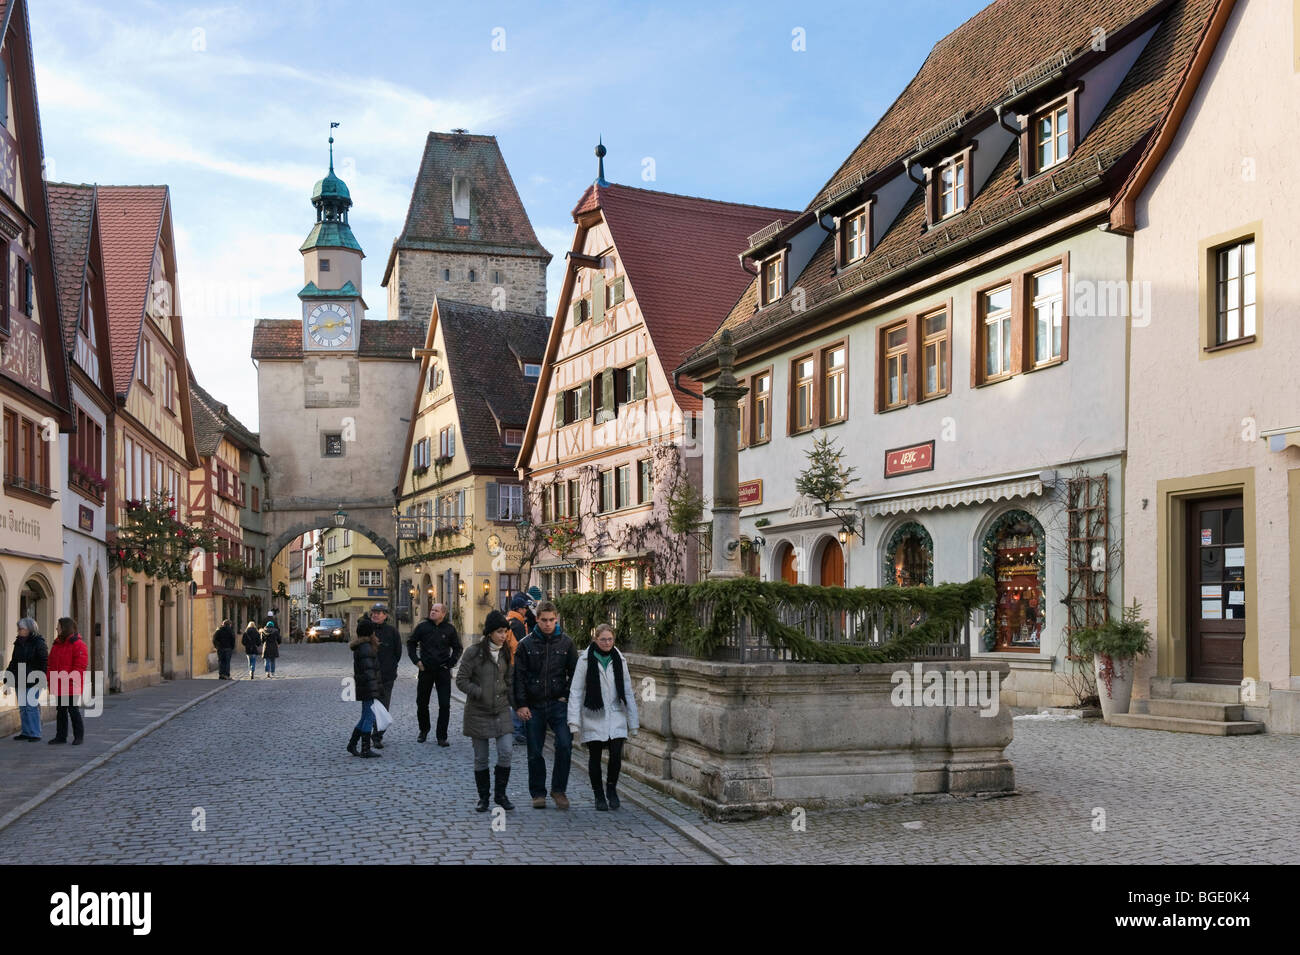 Rodergasse and St Mark's Tower, Rothenburg ob der Tauber, Bavaria, Germany Stock Photo